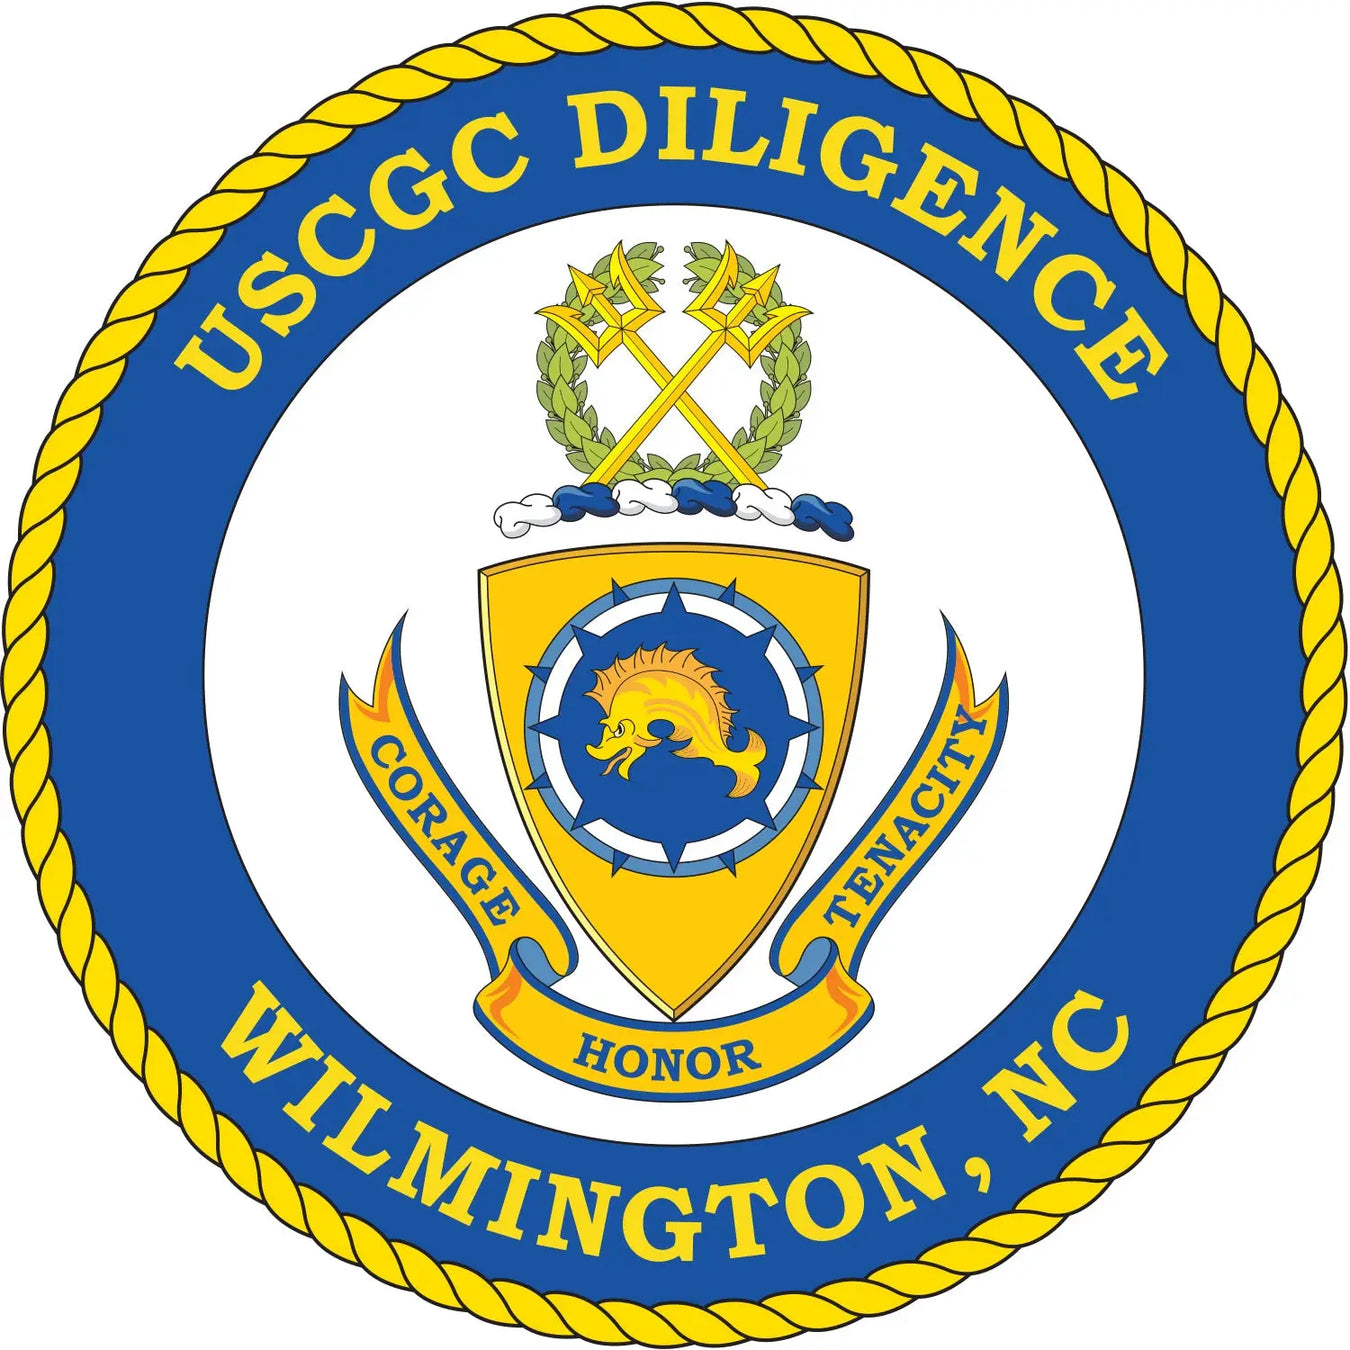 USCGC Diligence (WMEC-616)